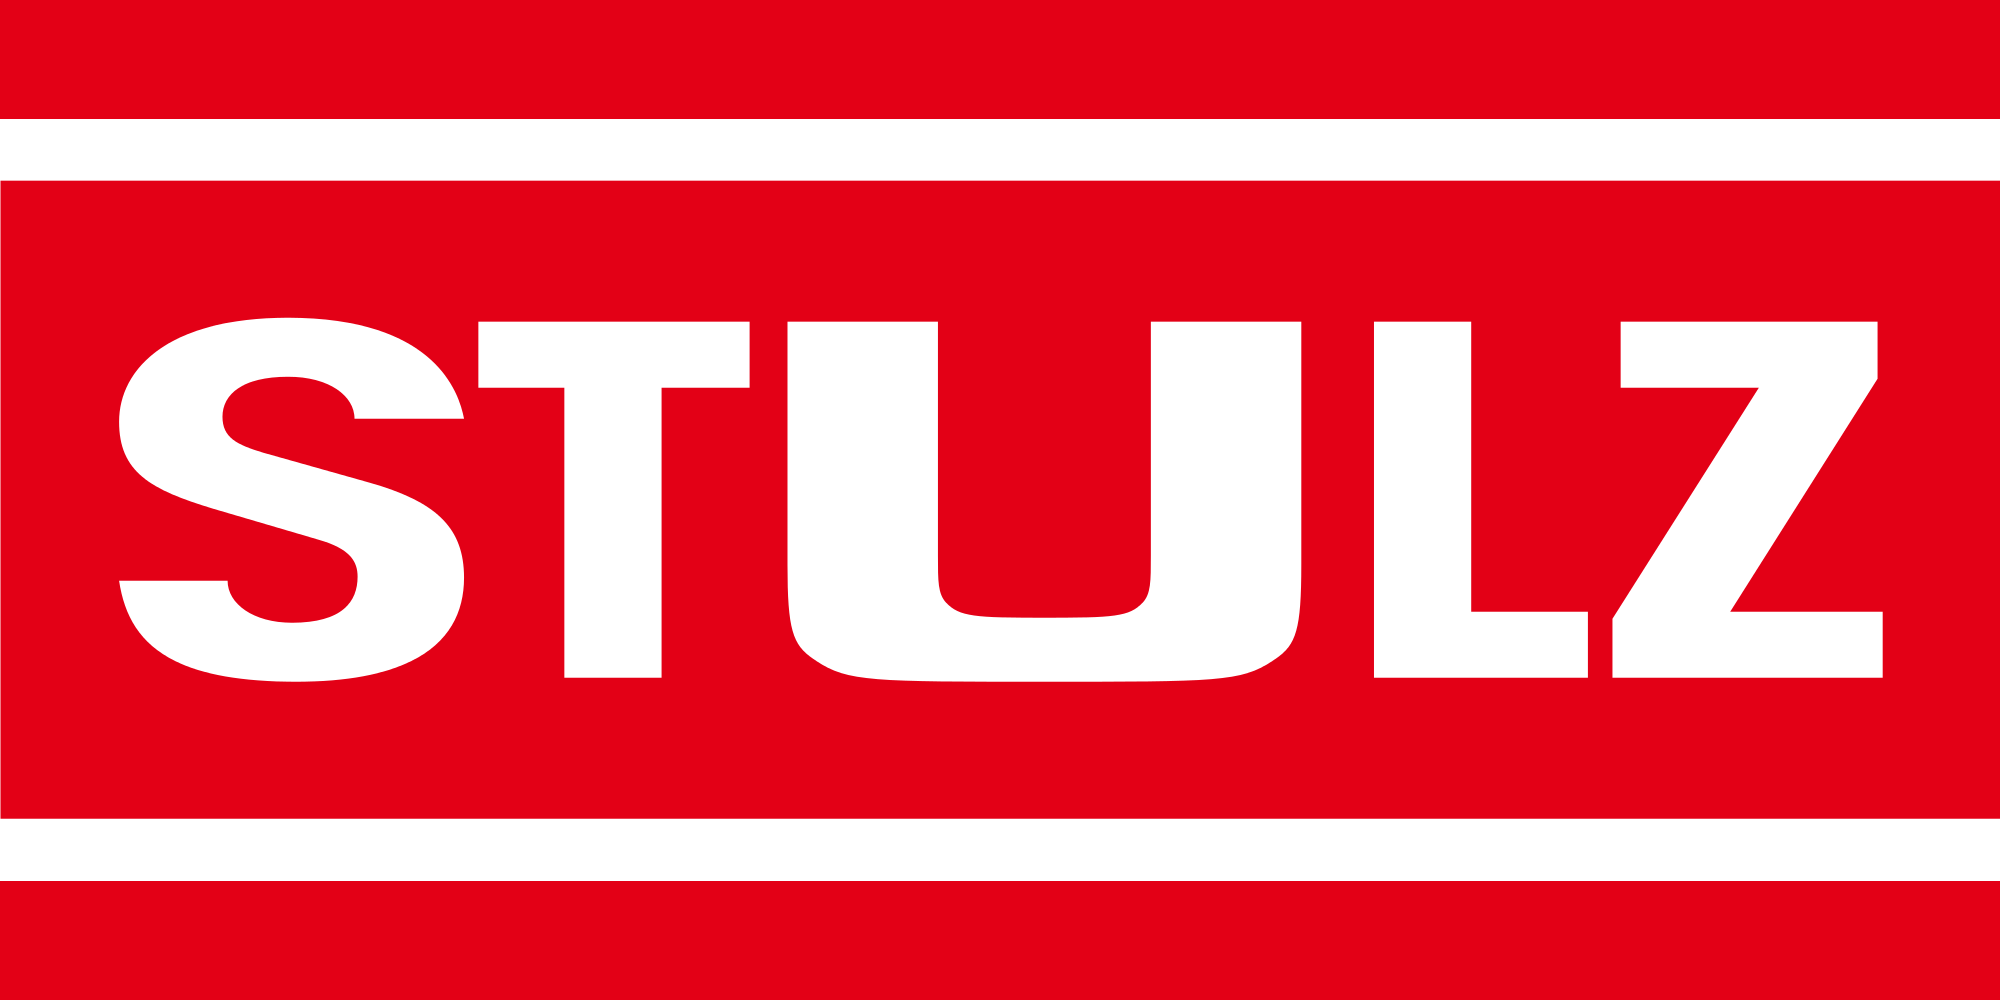 Logo Stulz